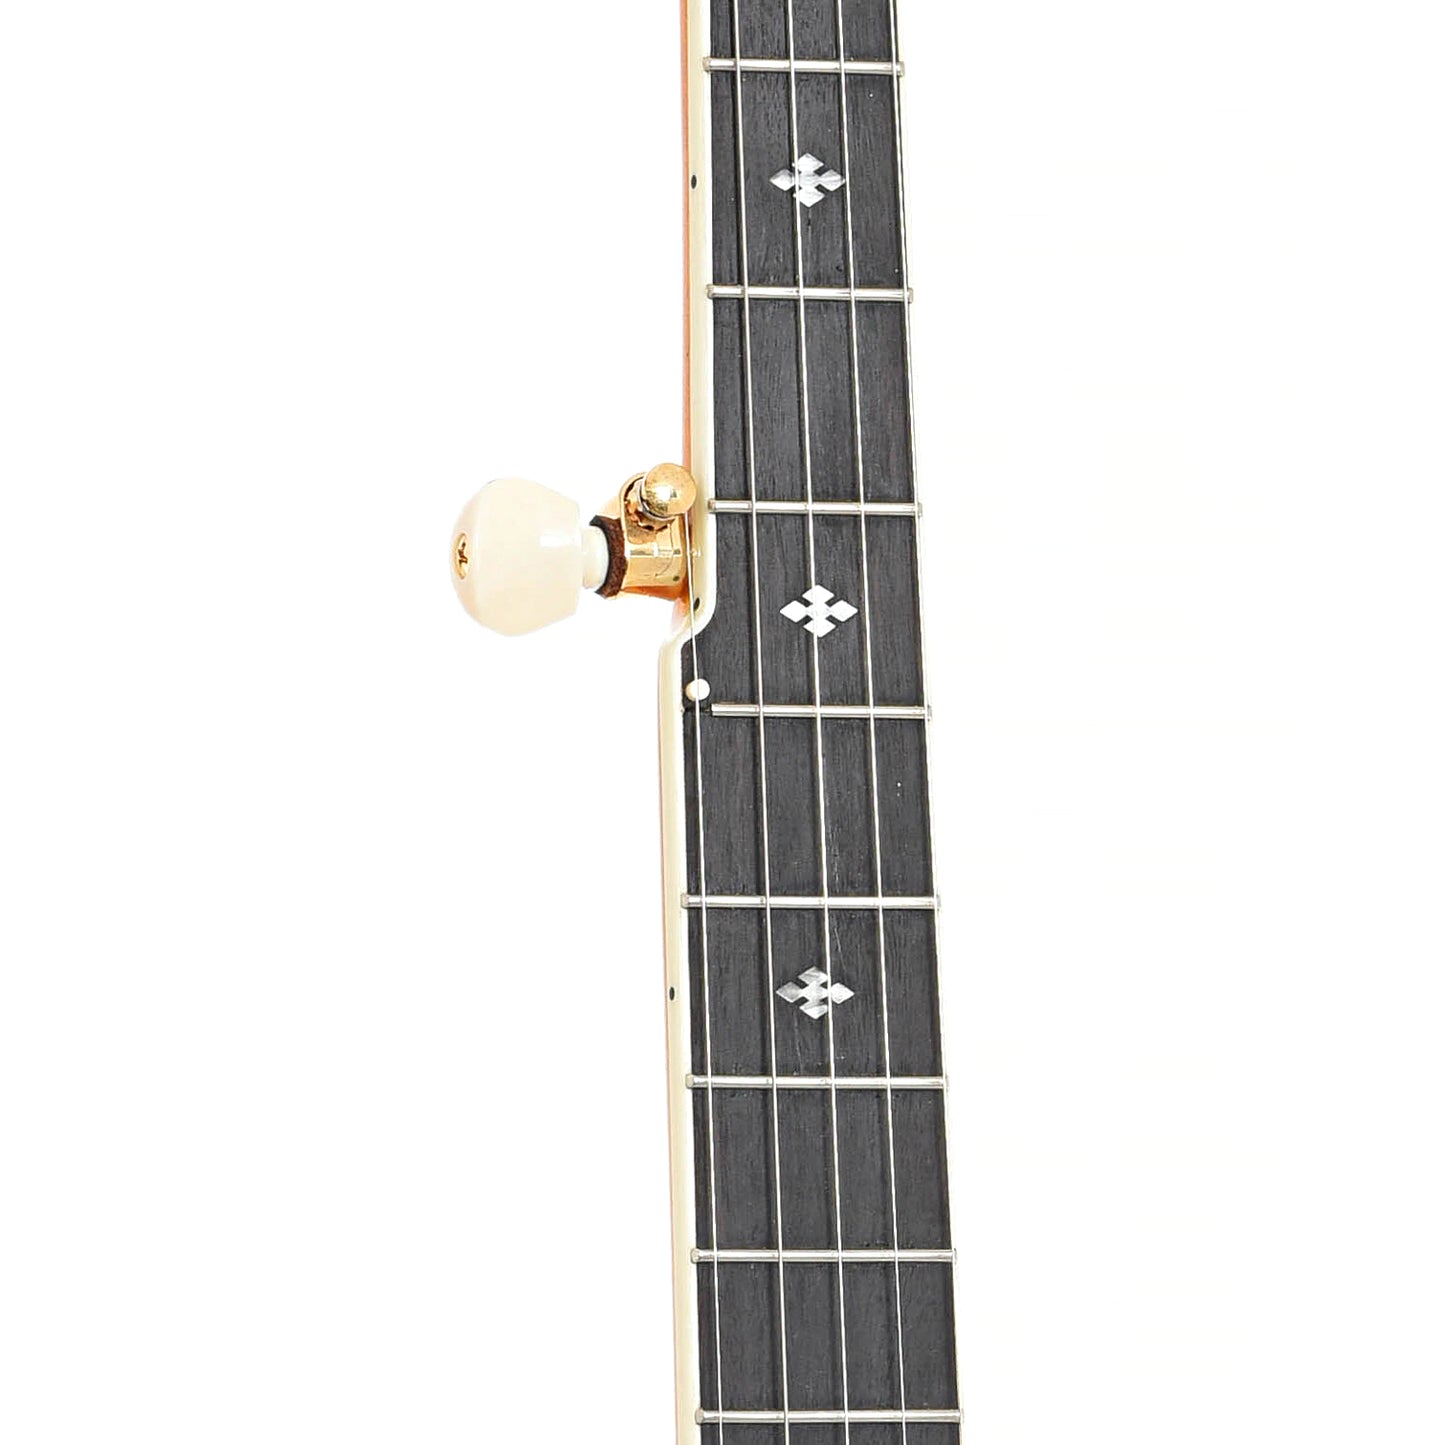 Fretbaord of Gold Tone EBM-5 Electric 5-String Banjo (recent)